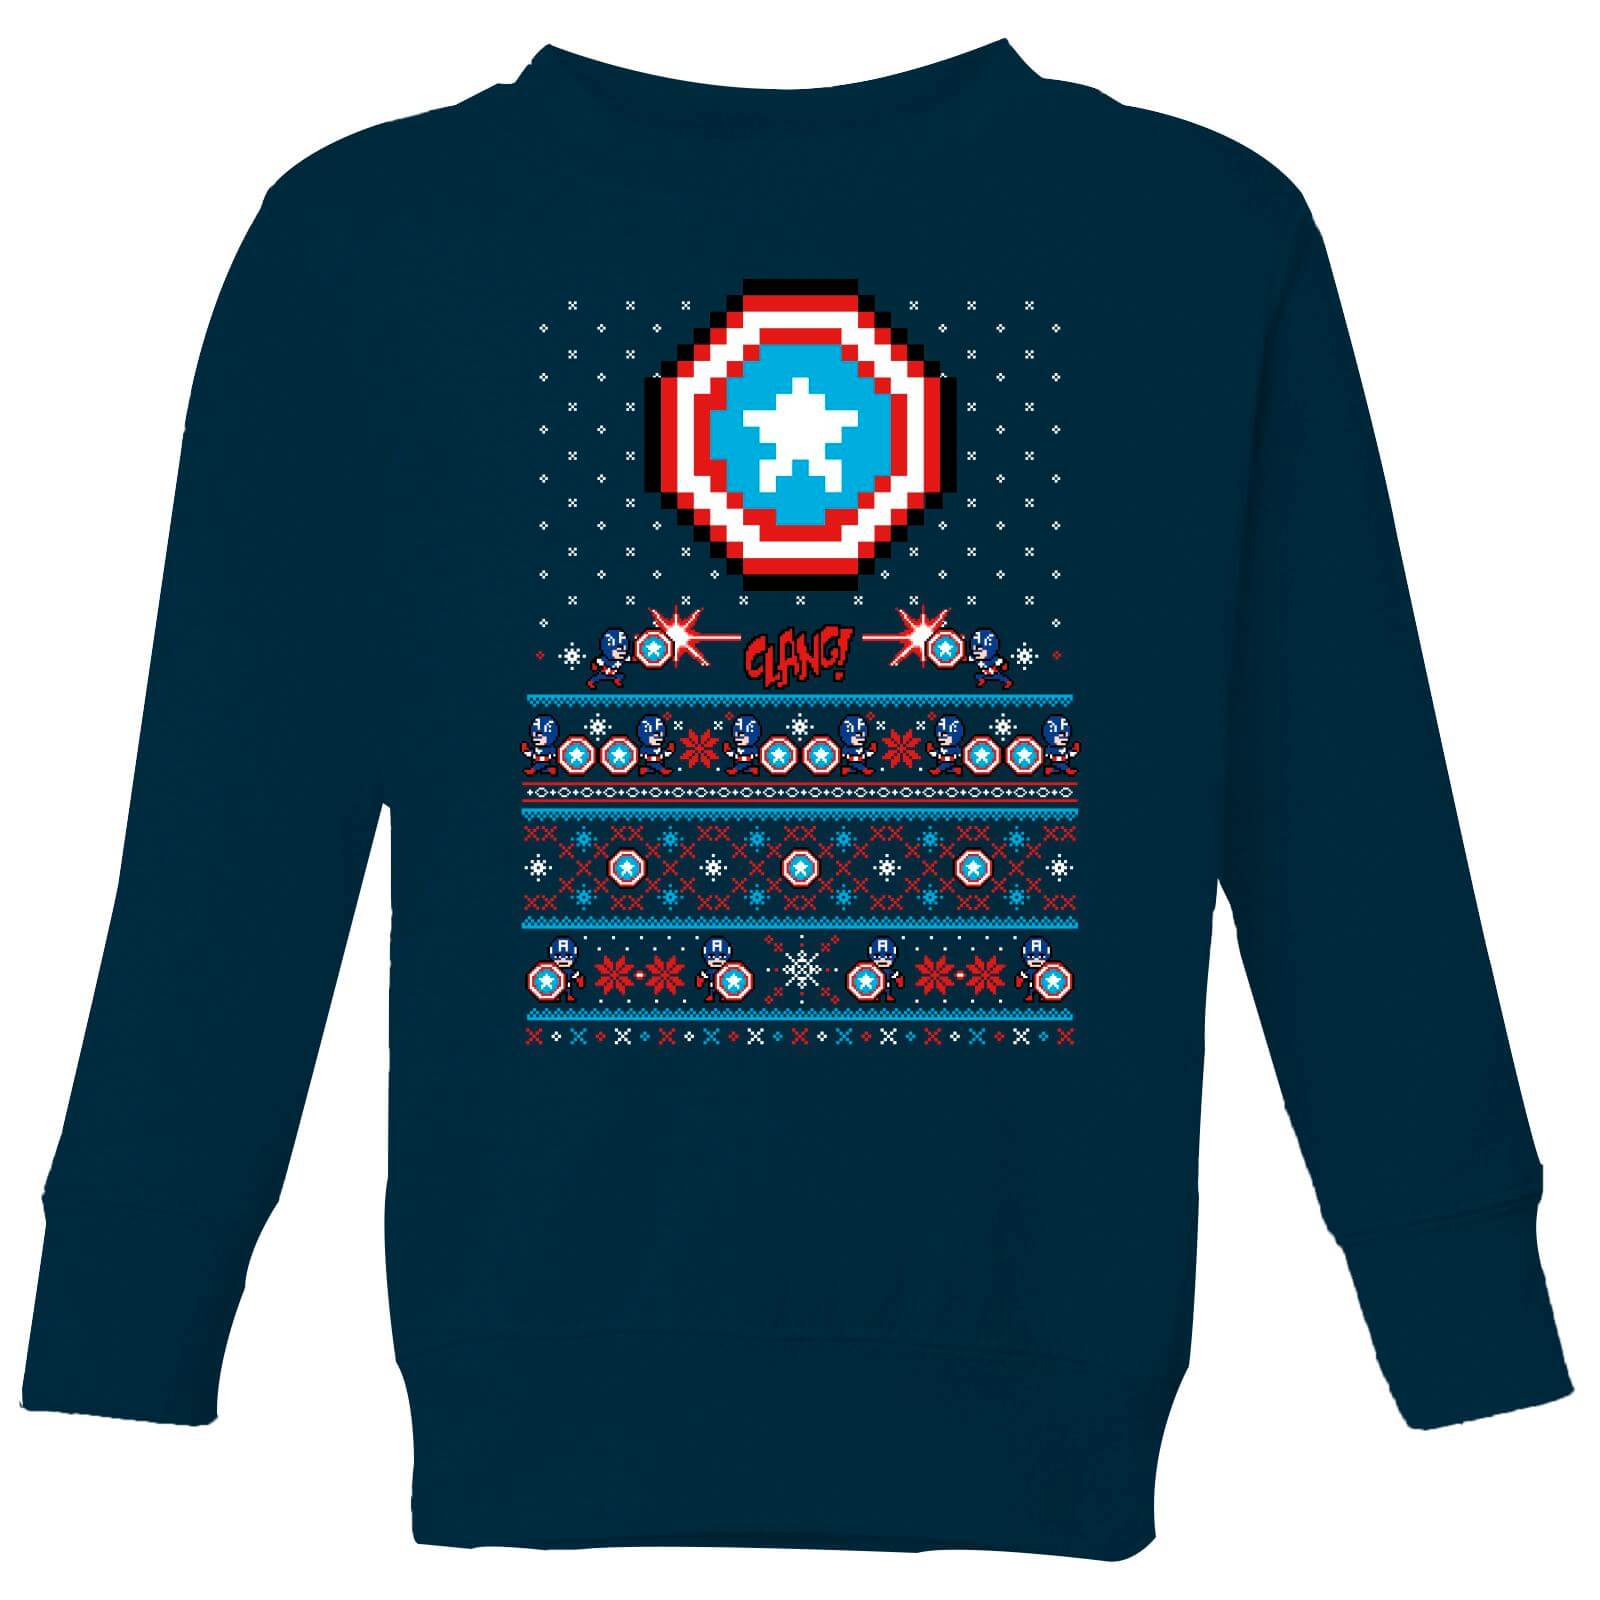 Marvel Avengers Captain America Pixel Art Kids Christmas Sweatshirt - Navy - 11-12 Years - Navy